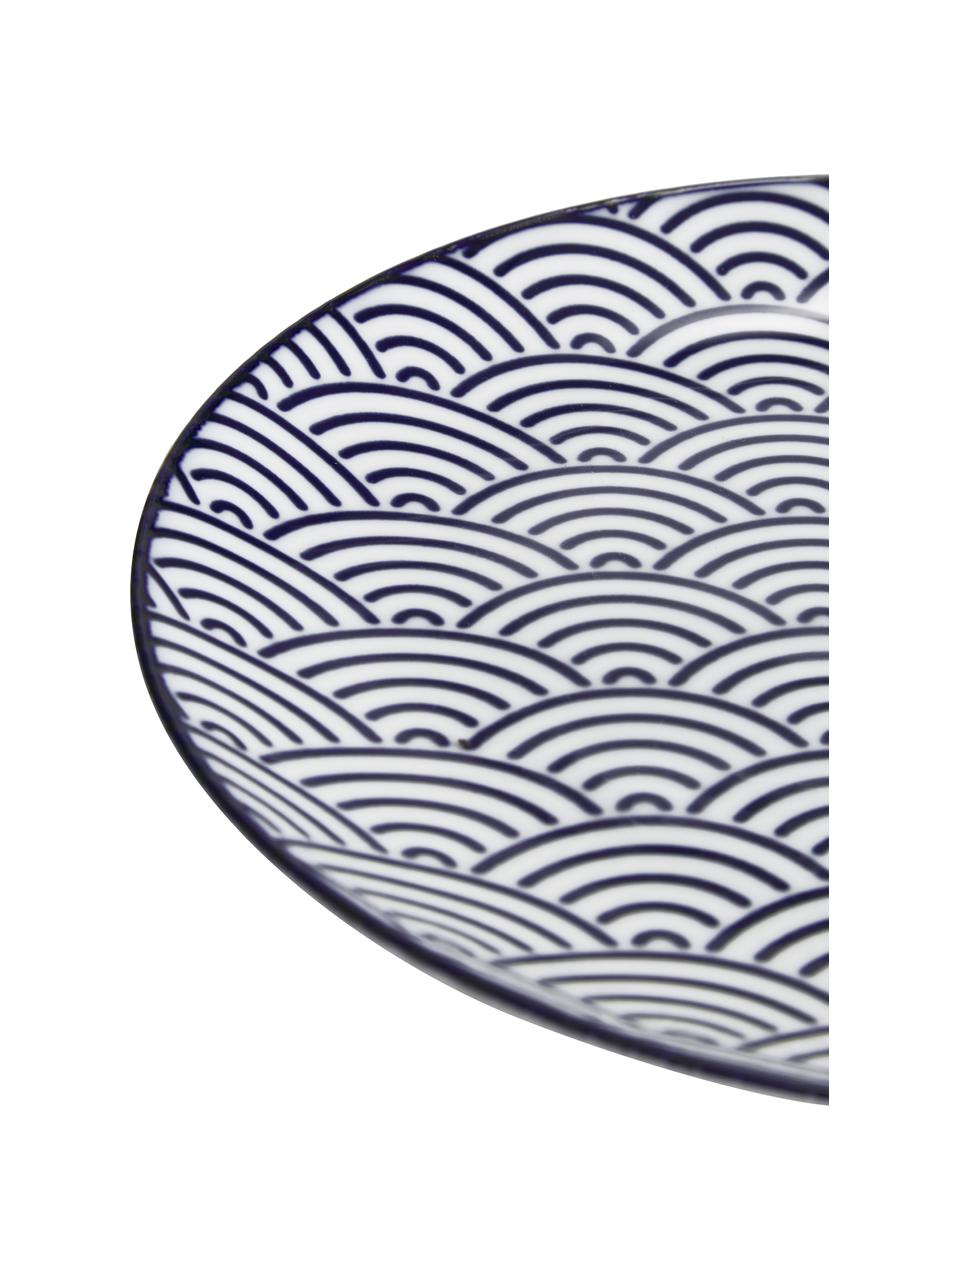 Platos postre arteanales de porcelana Nippon, 4 uds., Porcelana, Azul, blanco, Ø 21 cm